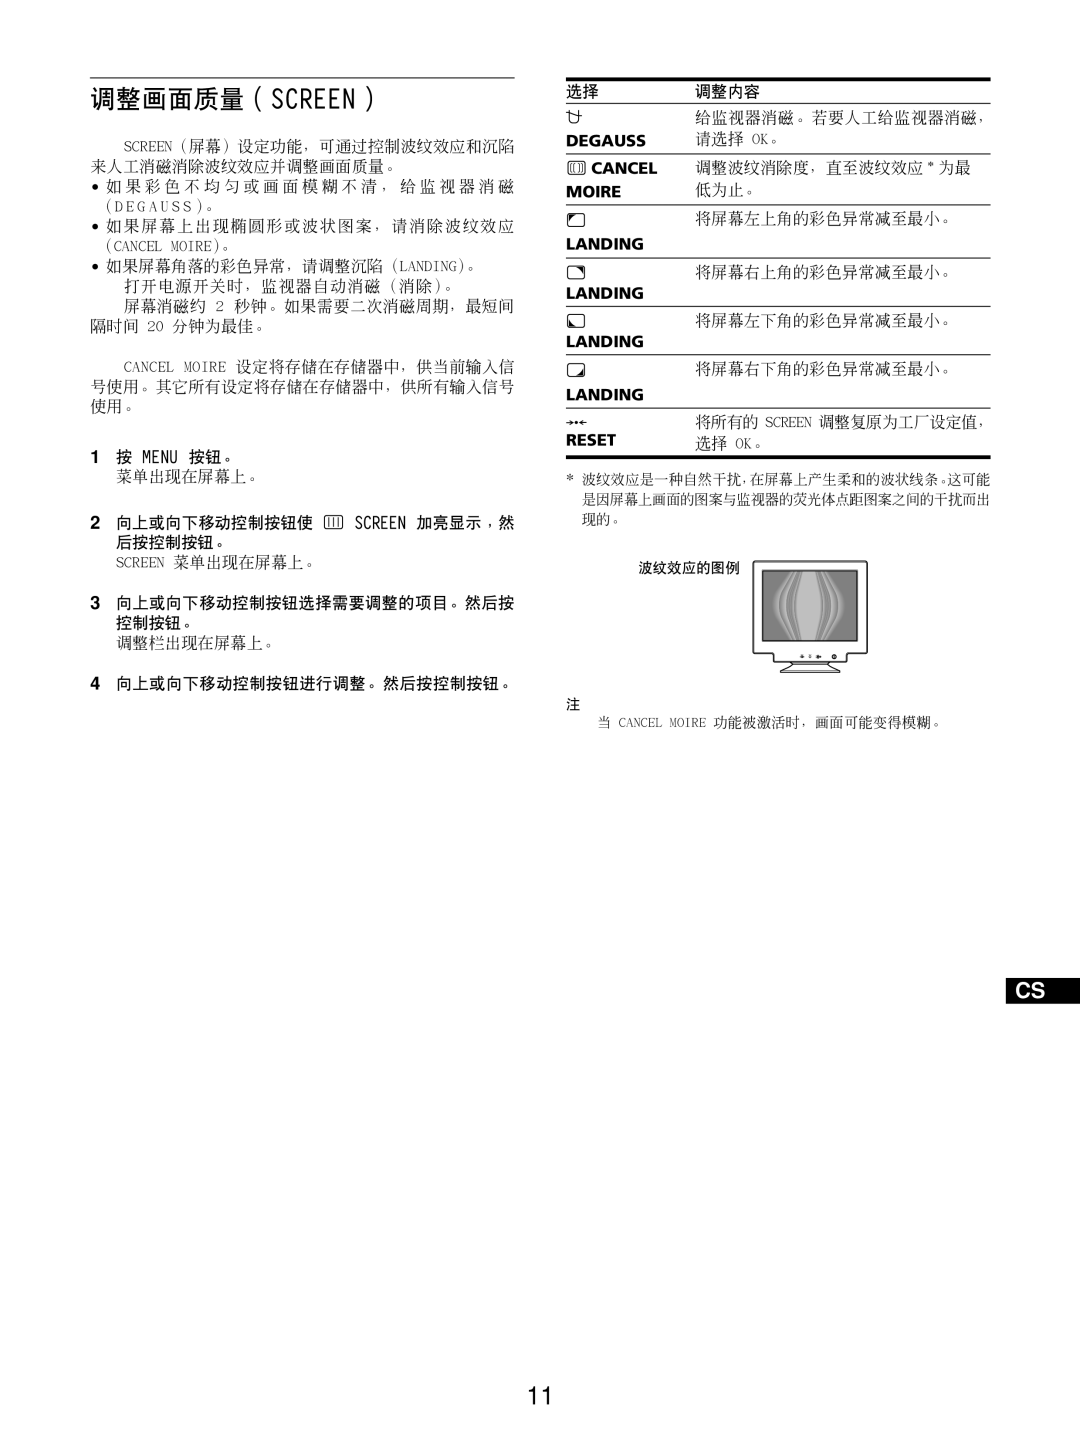 Sony GDM-5510 operating instructions 调整画面质量（Screen）, Degauss, Cancel, Moire, Landing, Reset 